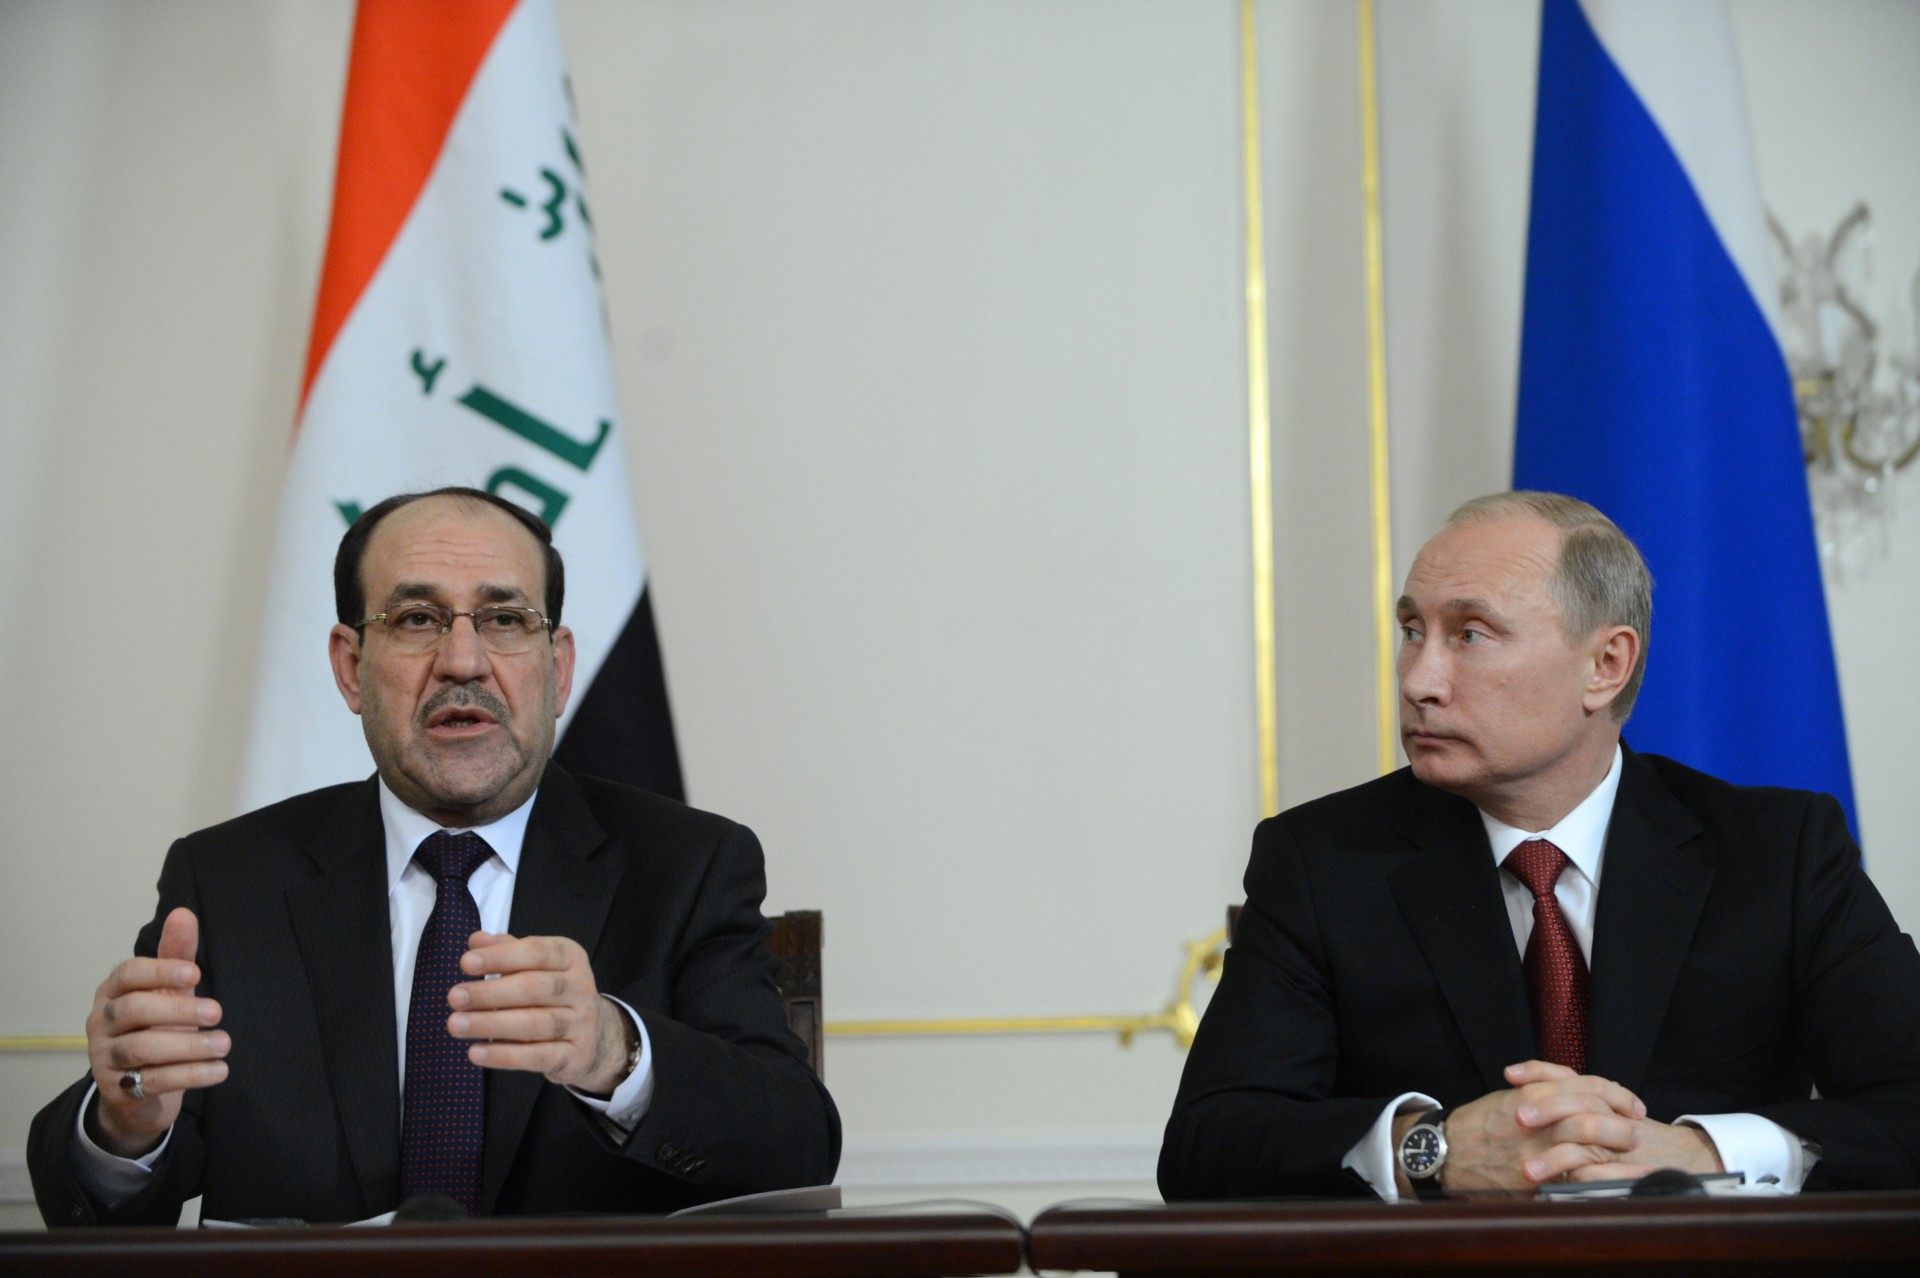 RUSSIA-IRAQ-SYRIA-DIPLOMACY